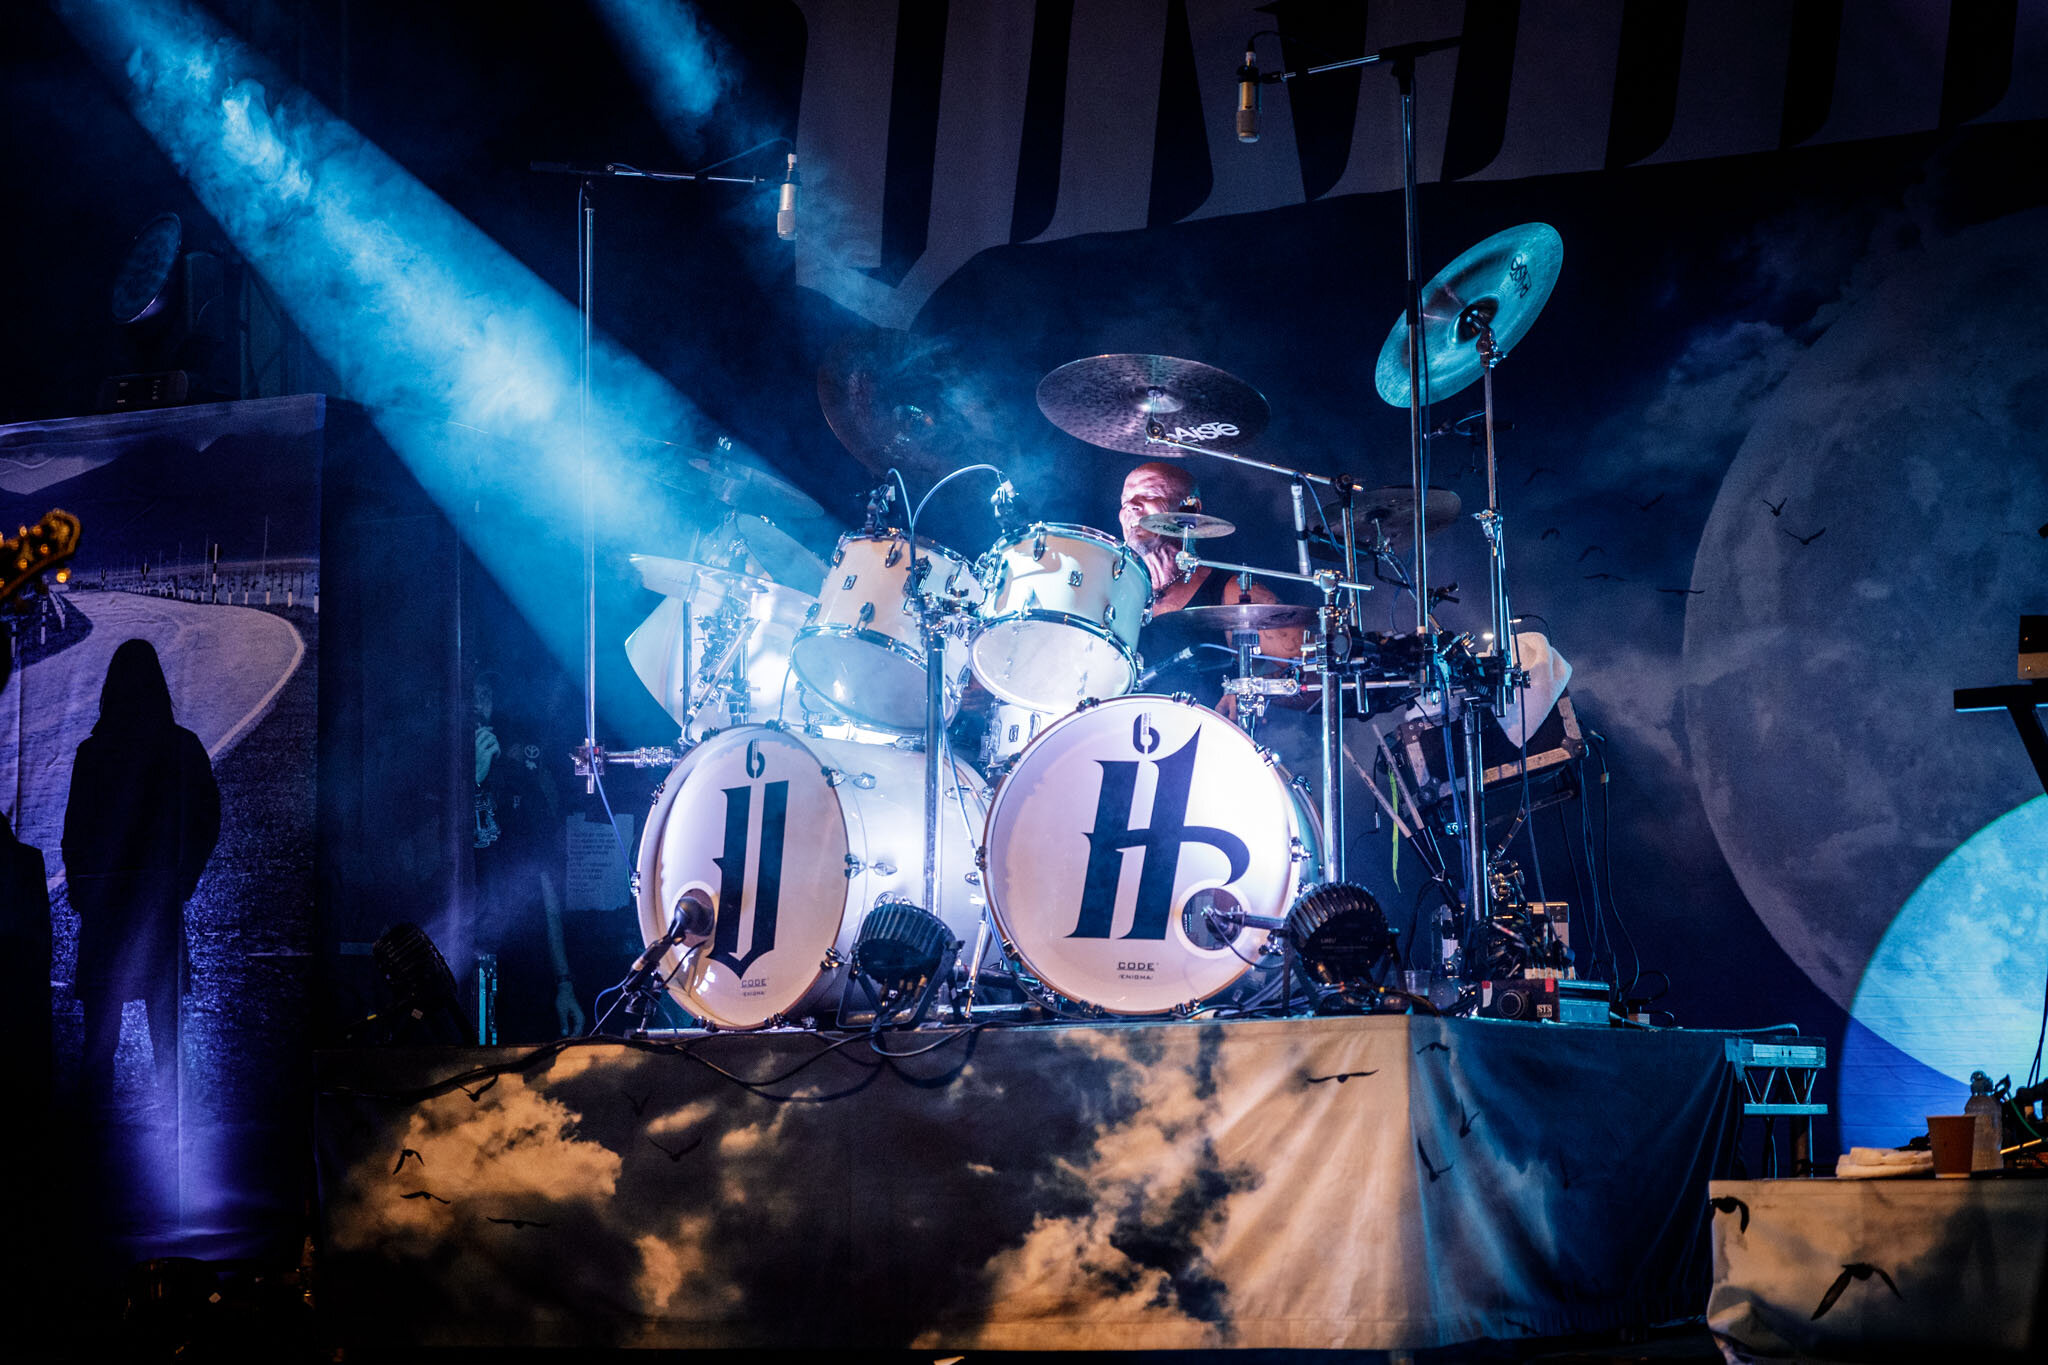  Uriah Heep at the Steelhouse Festival on June 25th 2021 ©Johann Wierzbicki 